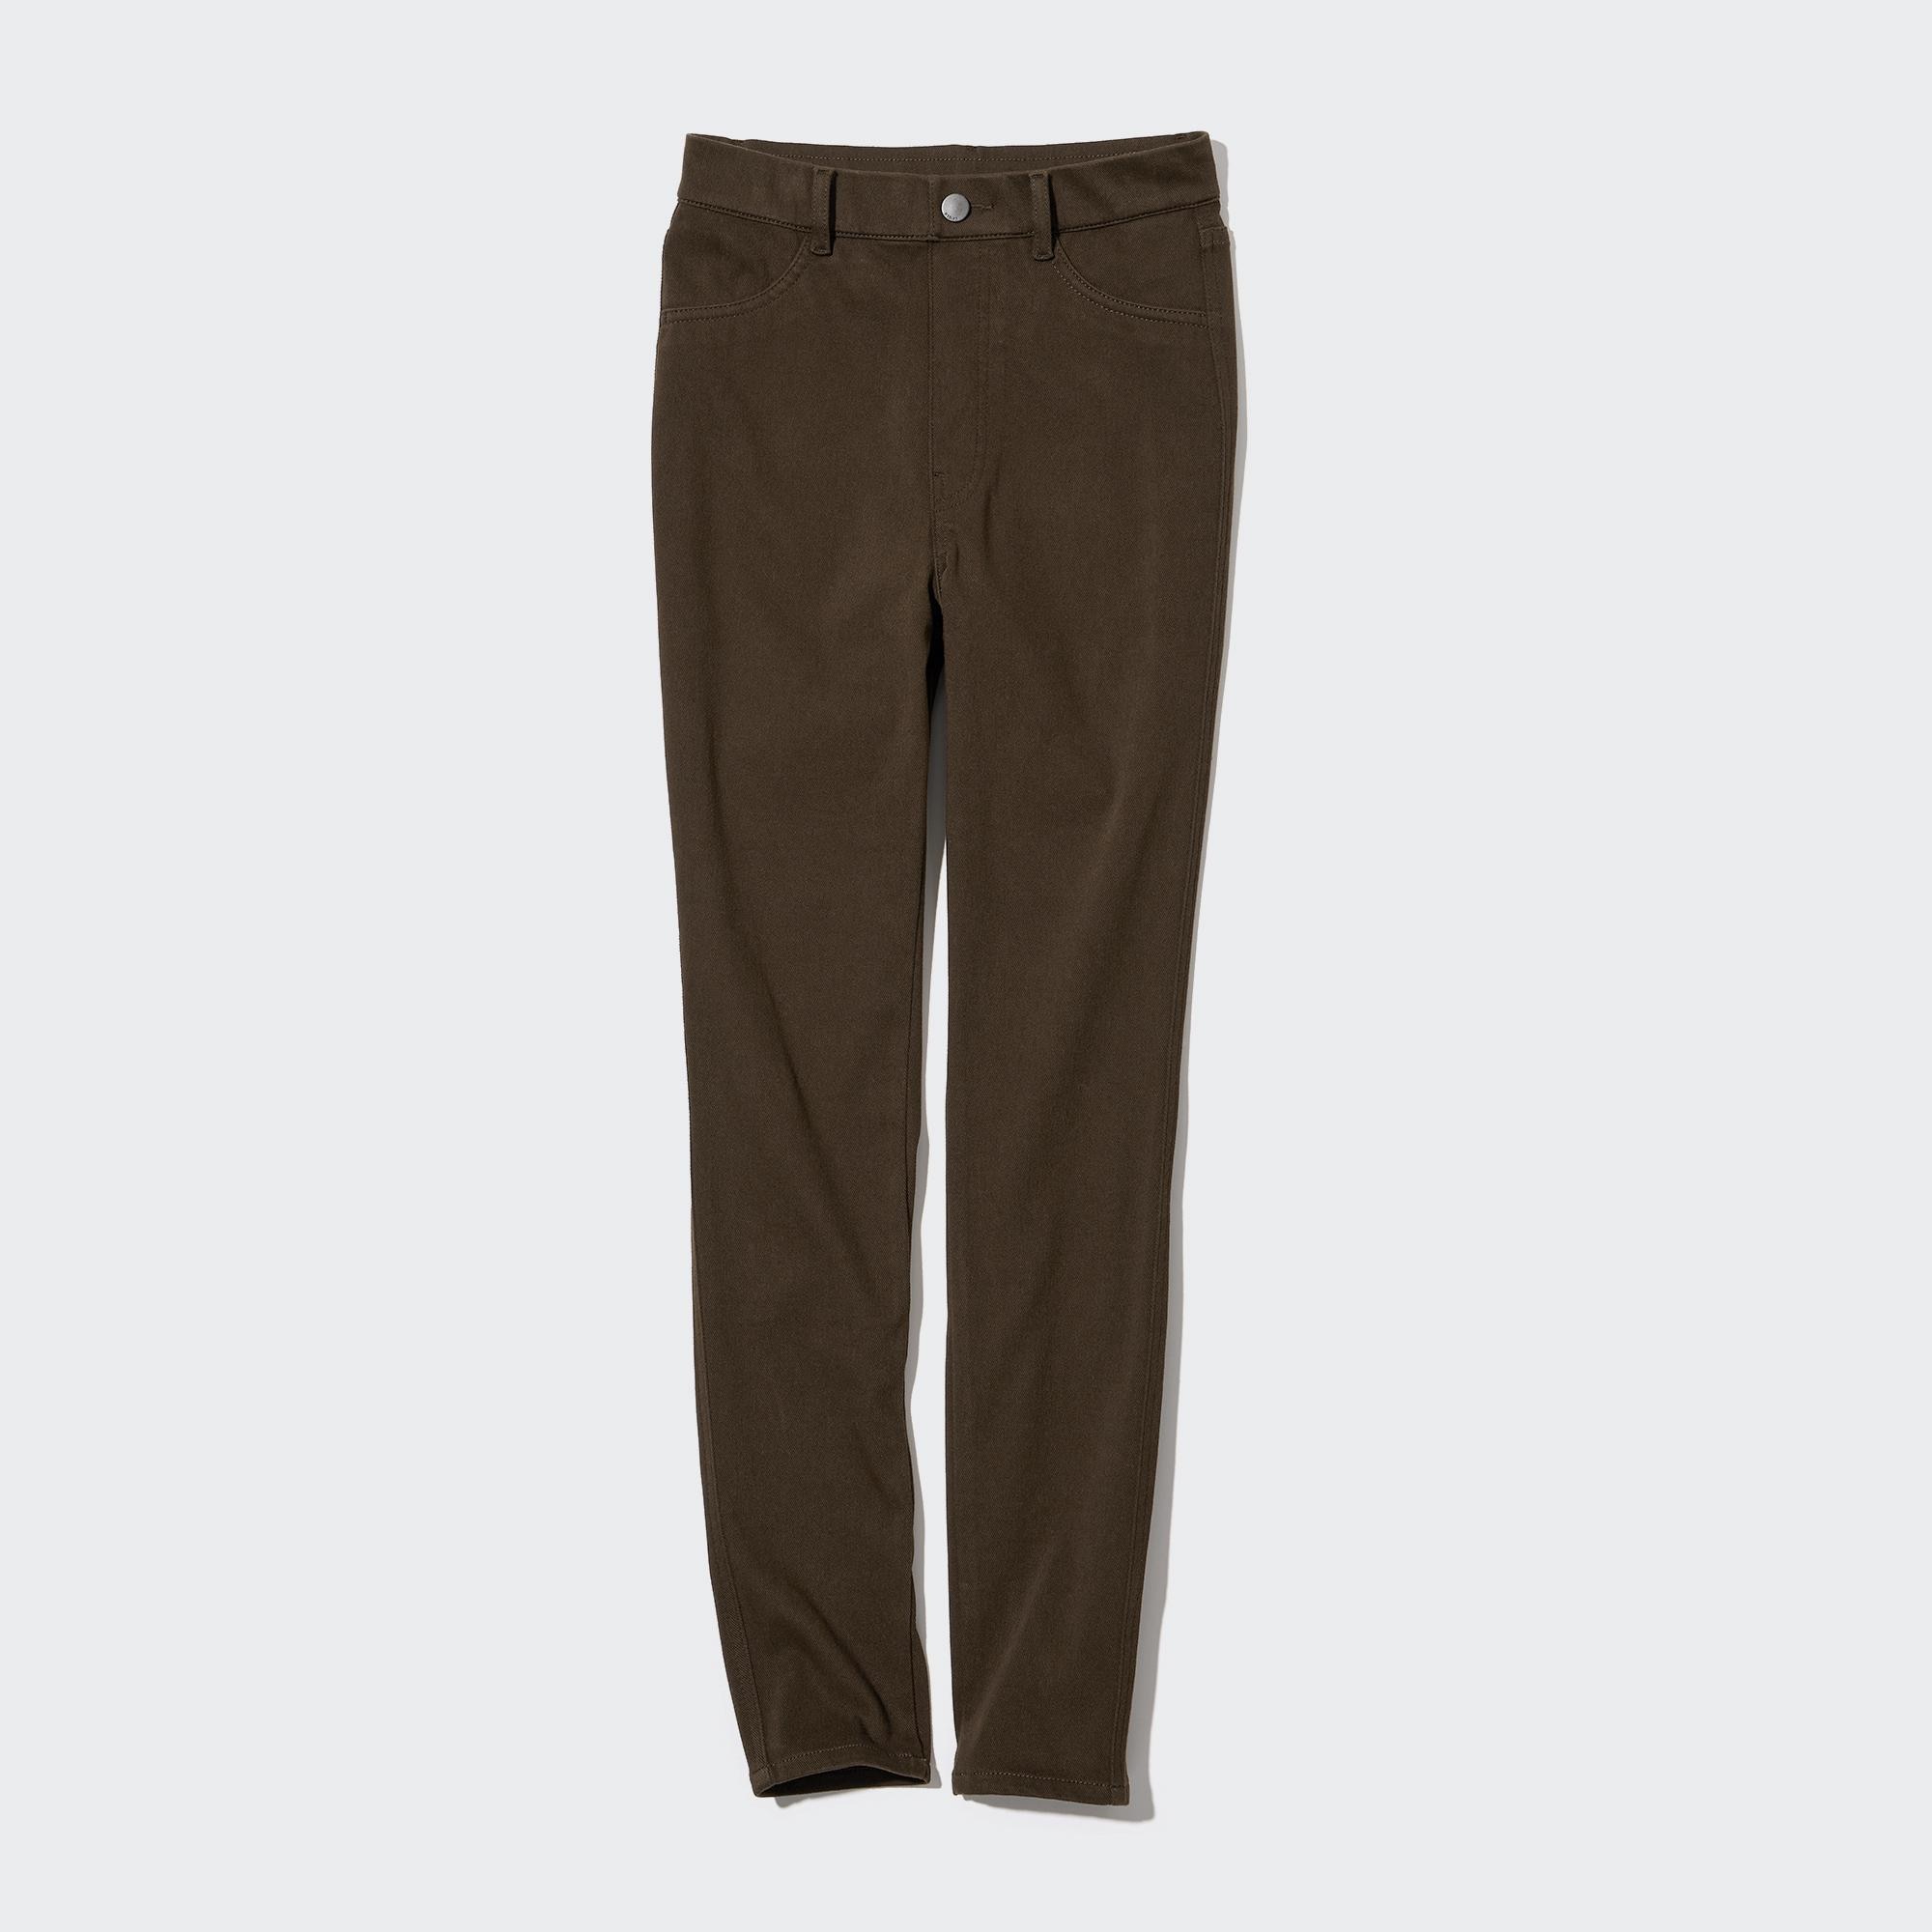 HEATTECH Warm-Lined Pants (Tall)